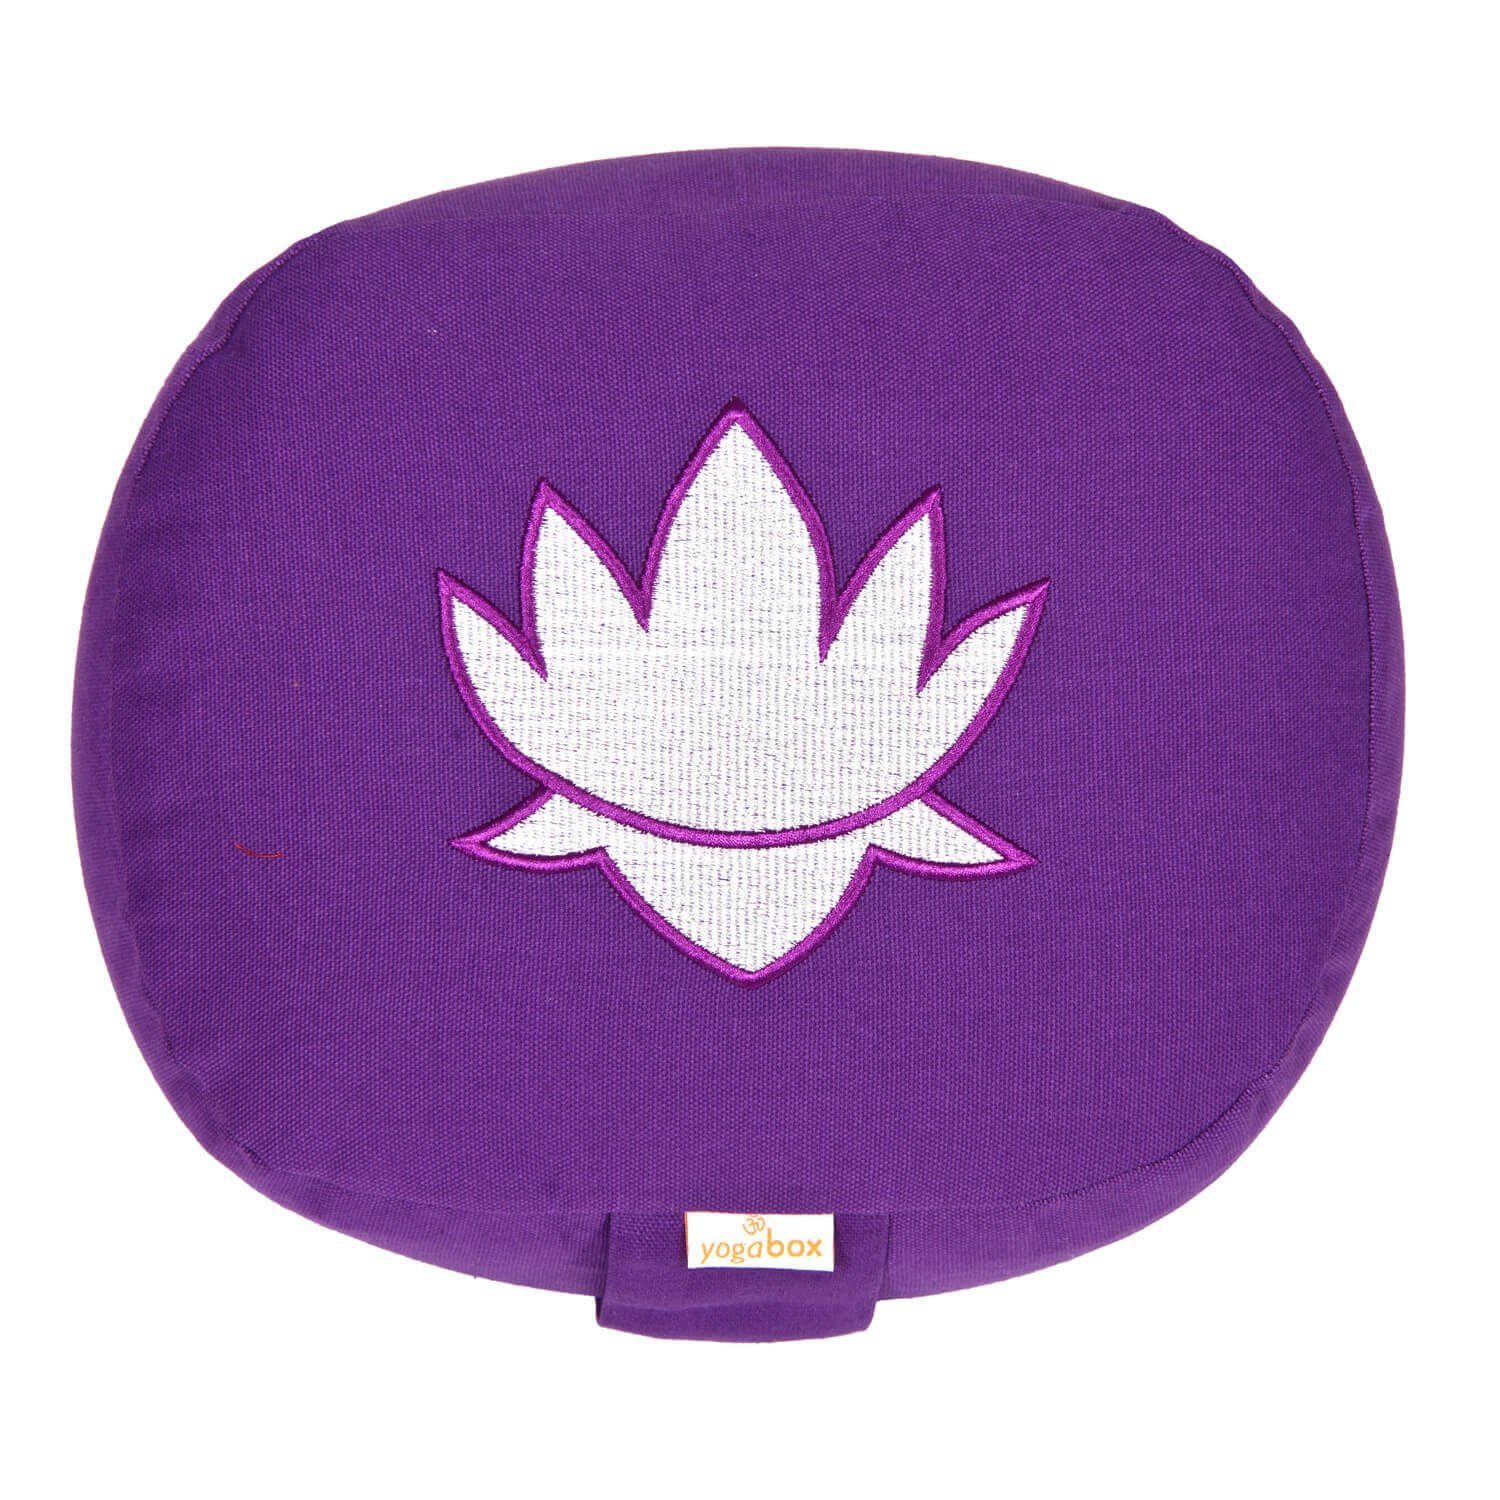 BASIC lila yogabox Lotus oval Yogakissen Stick